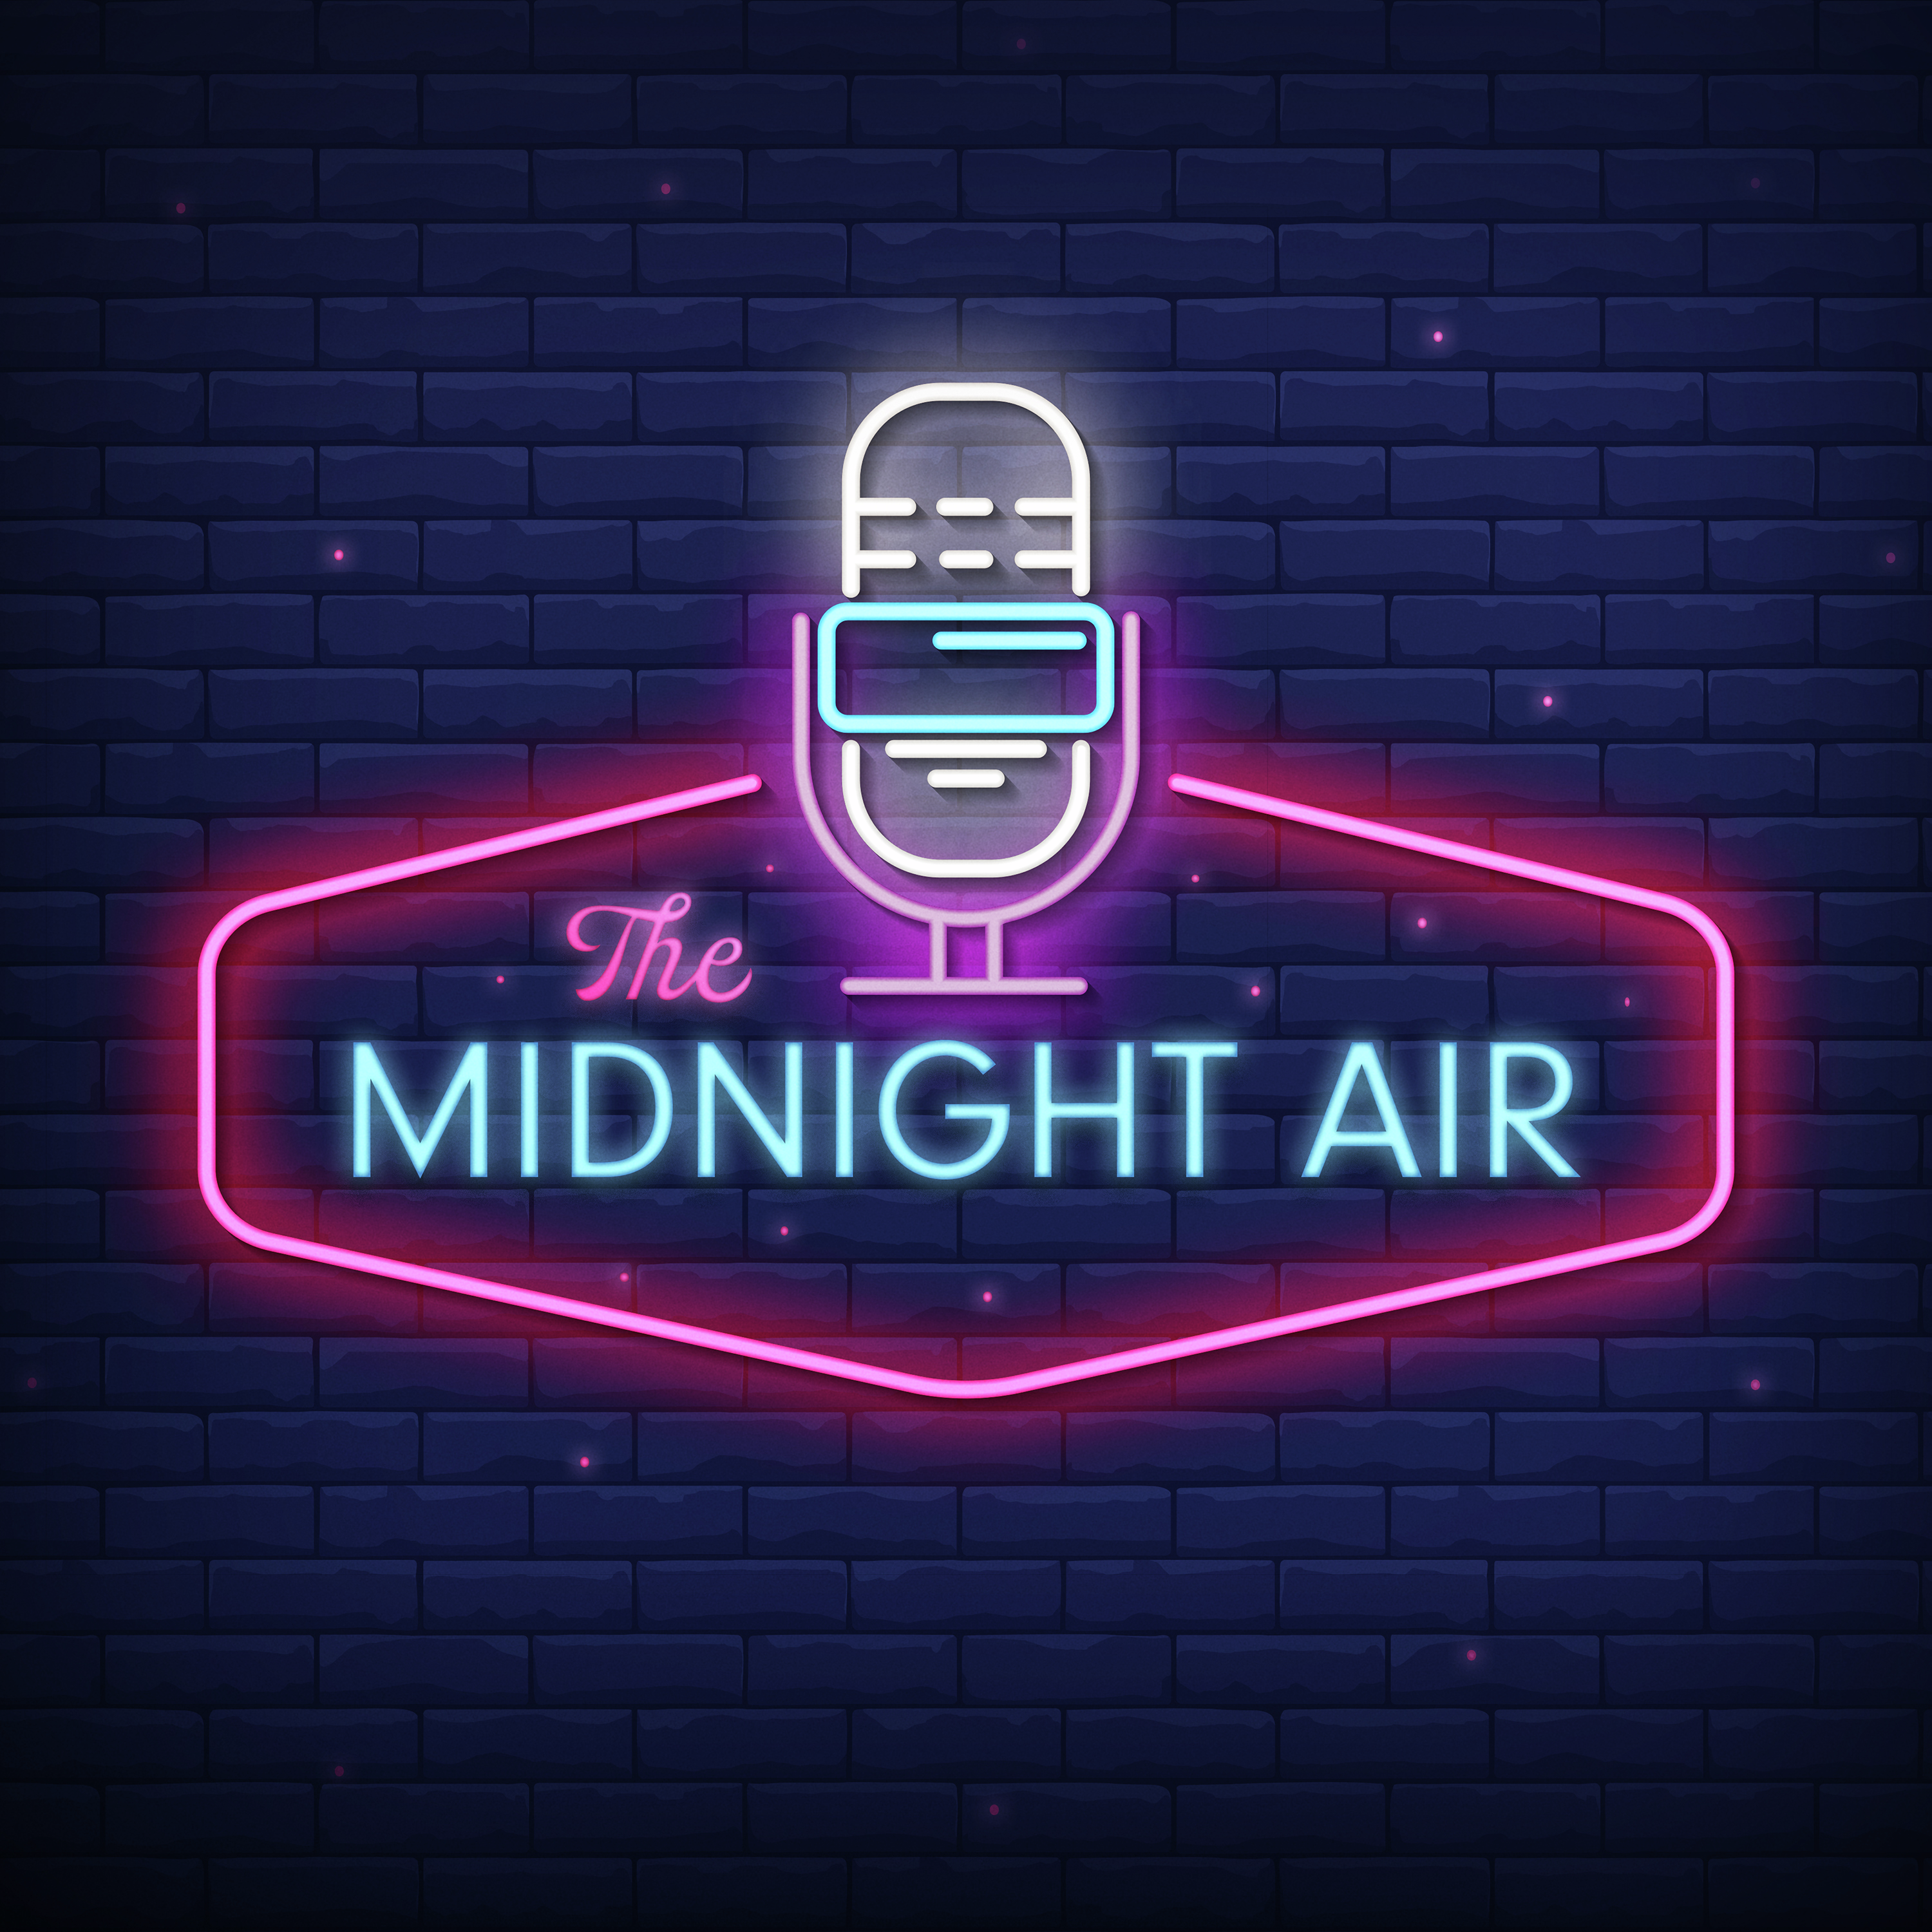 The Midnight Air